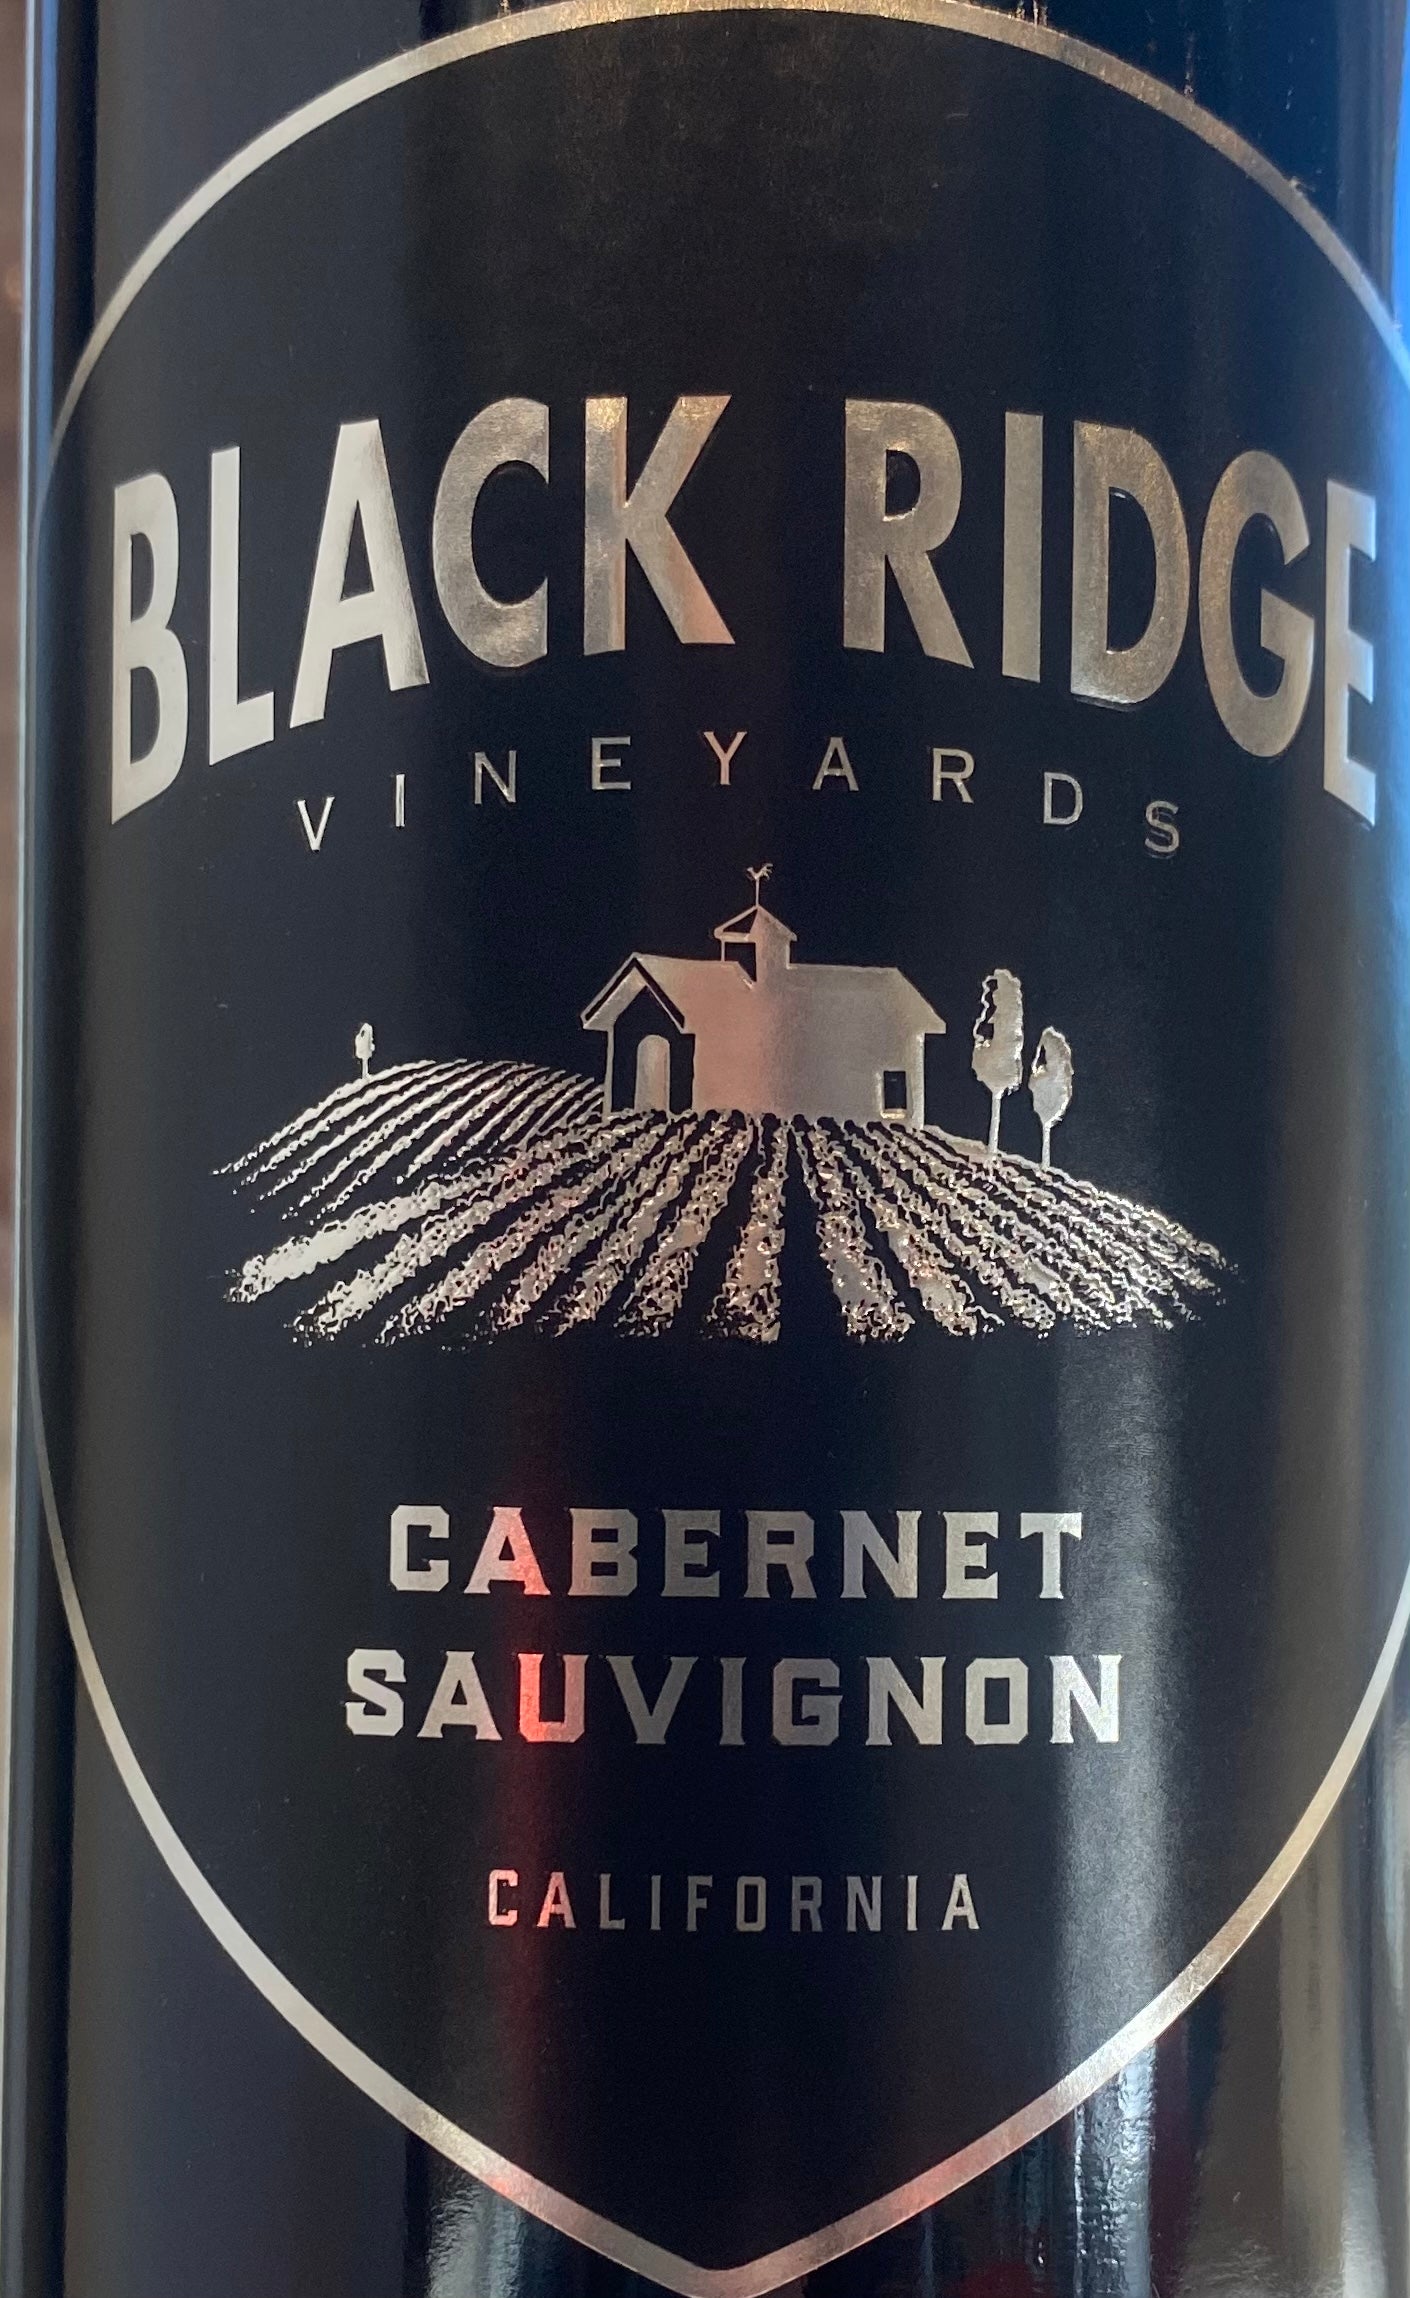 Black Ridge - Cabernet Sauvignon - California